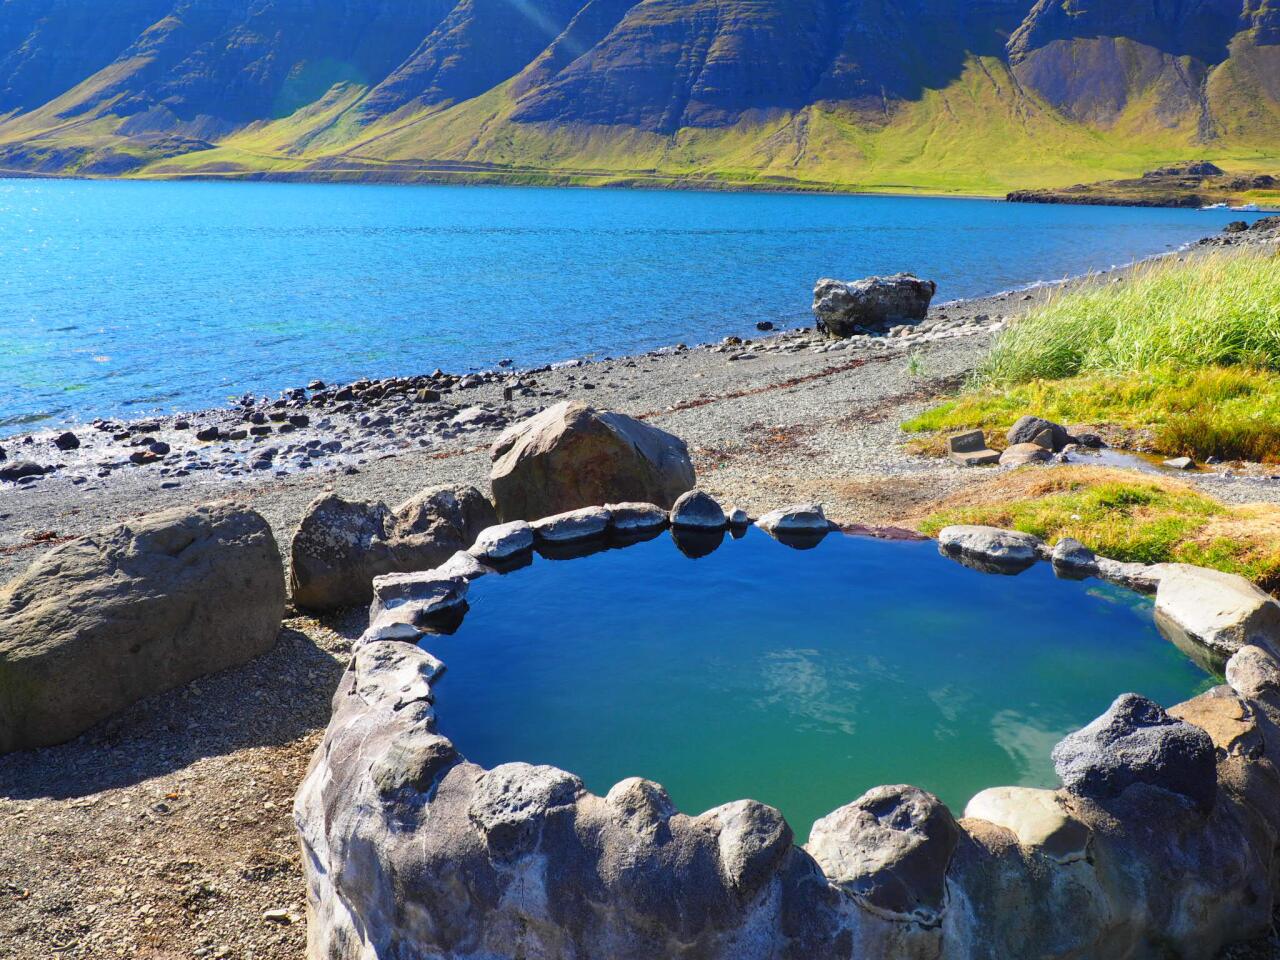 The Hvalfjardarlaug geothermal pool in Iceland.